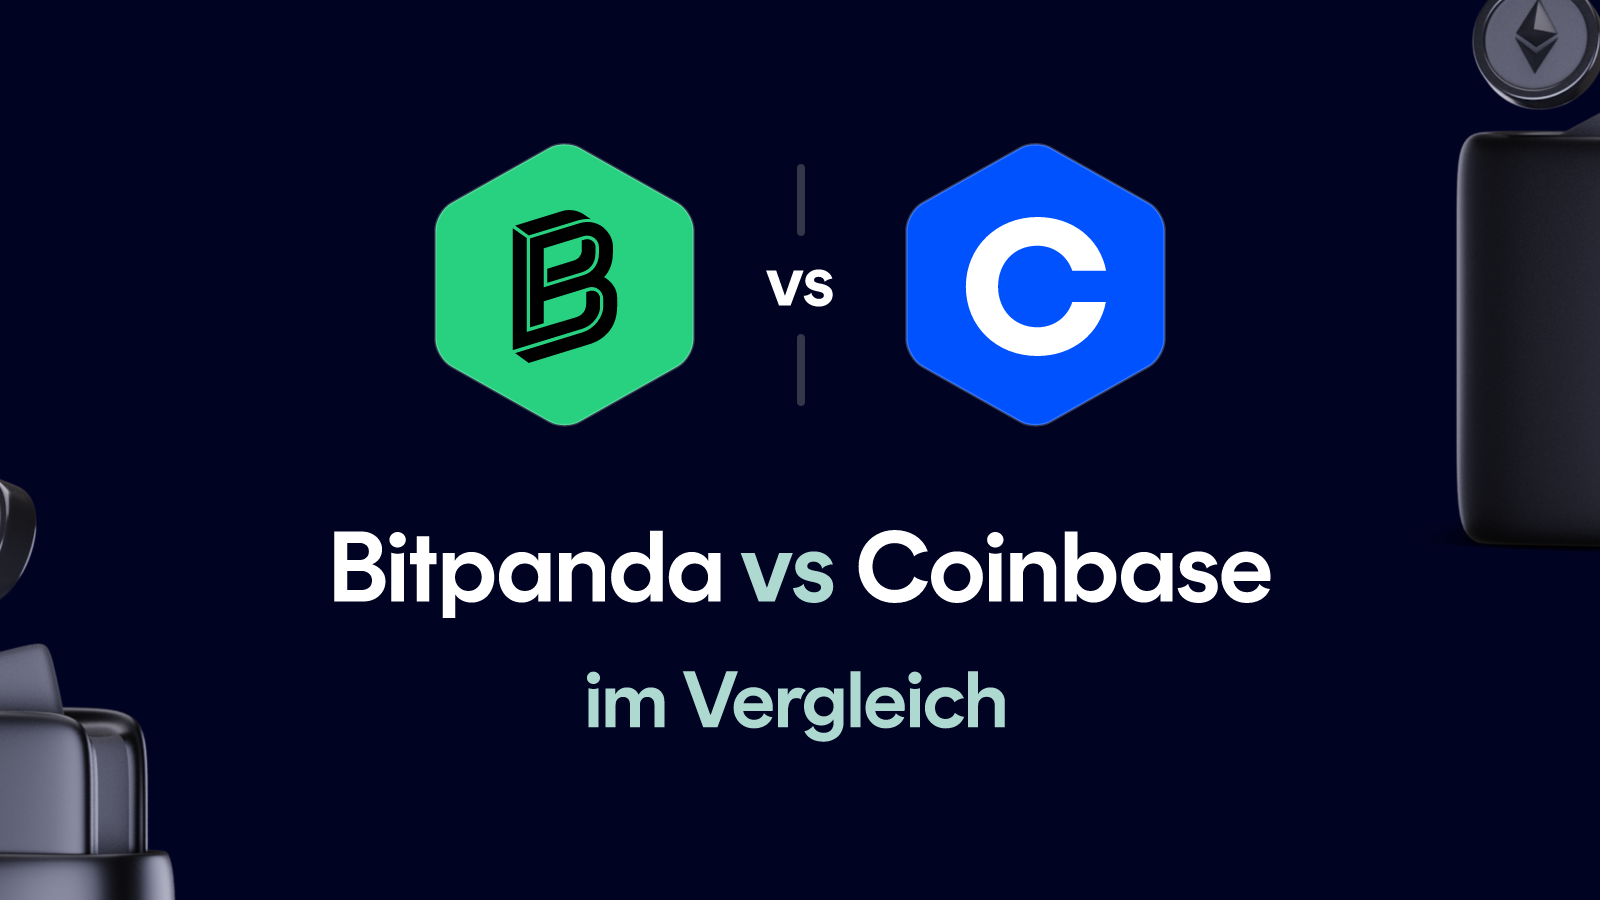 Bitpanda vs Coinbase im Vergleich